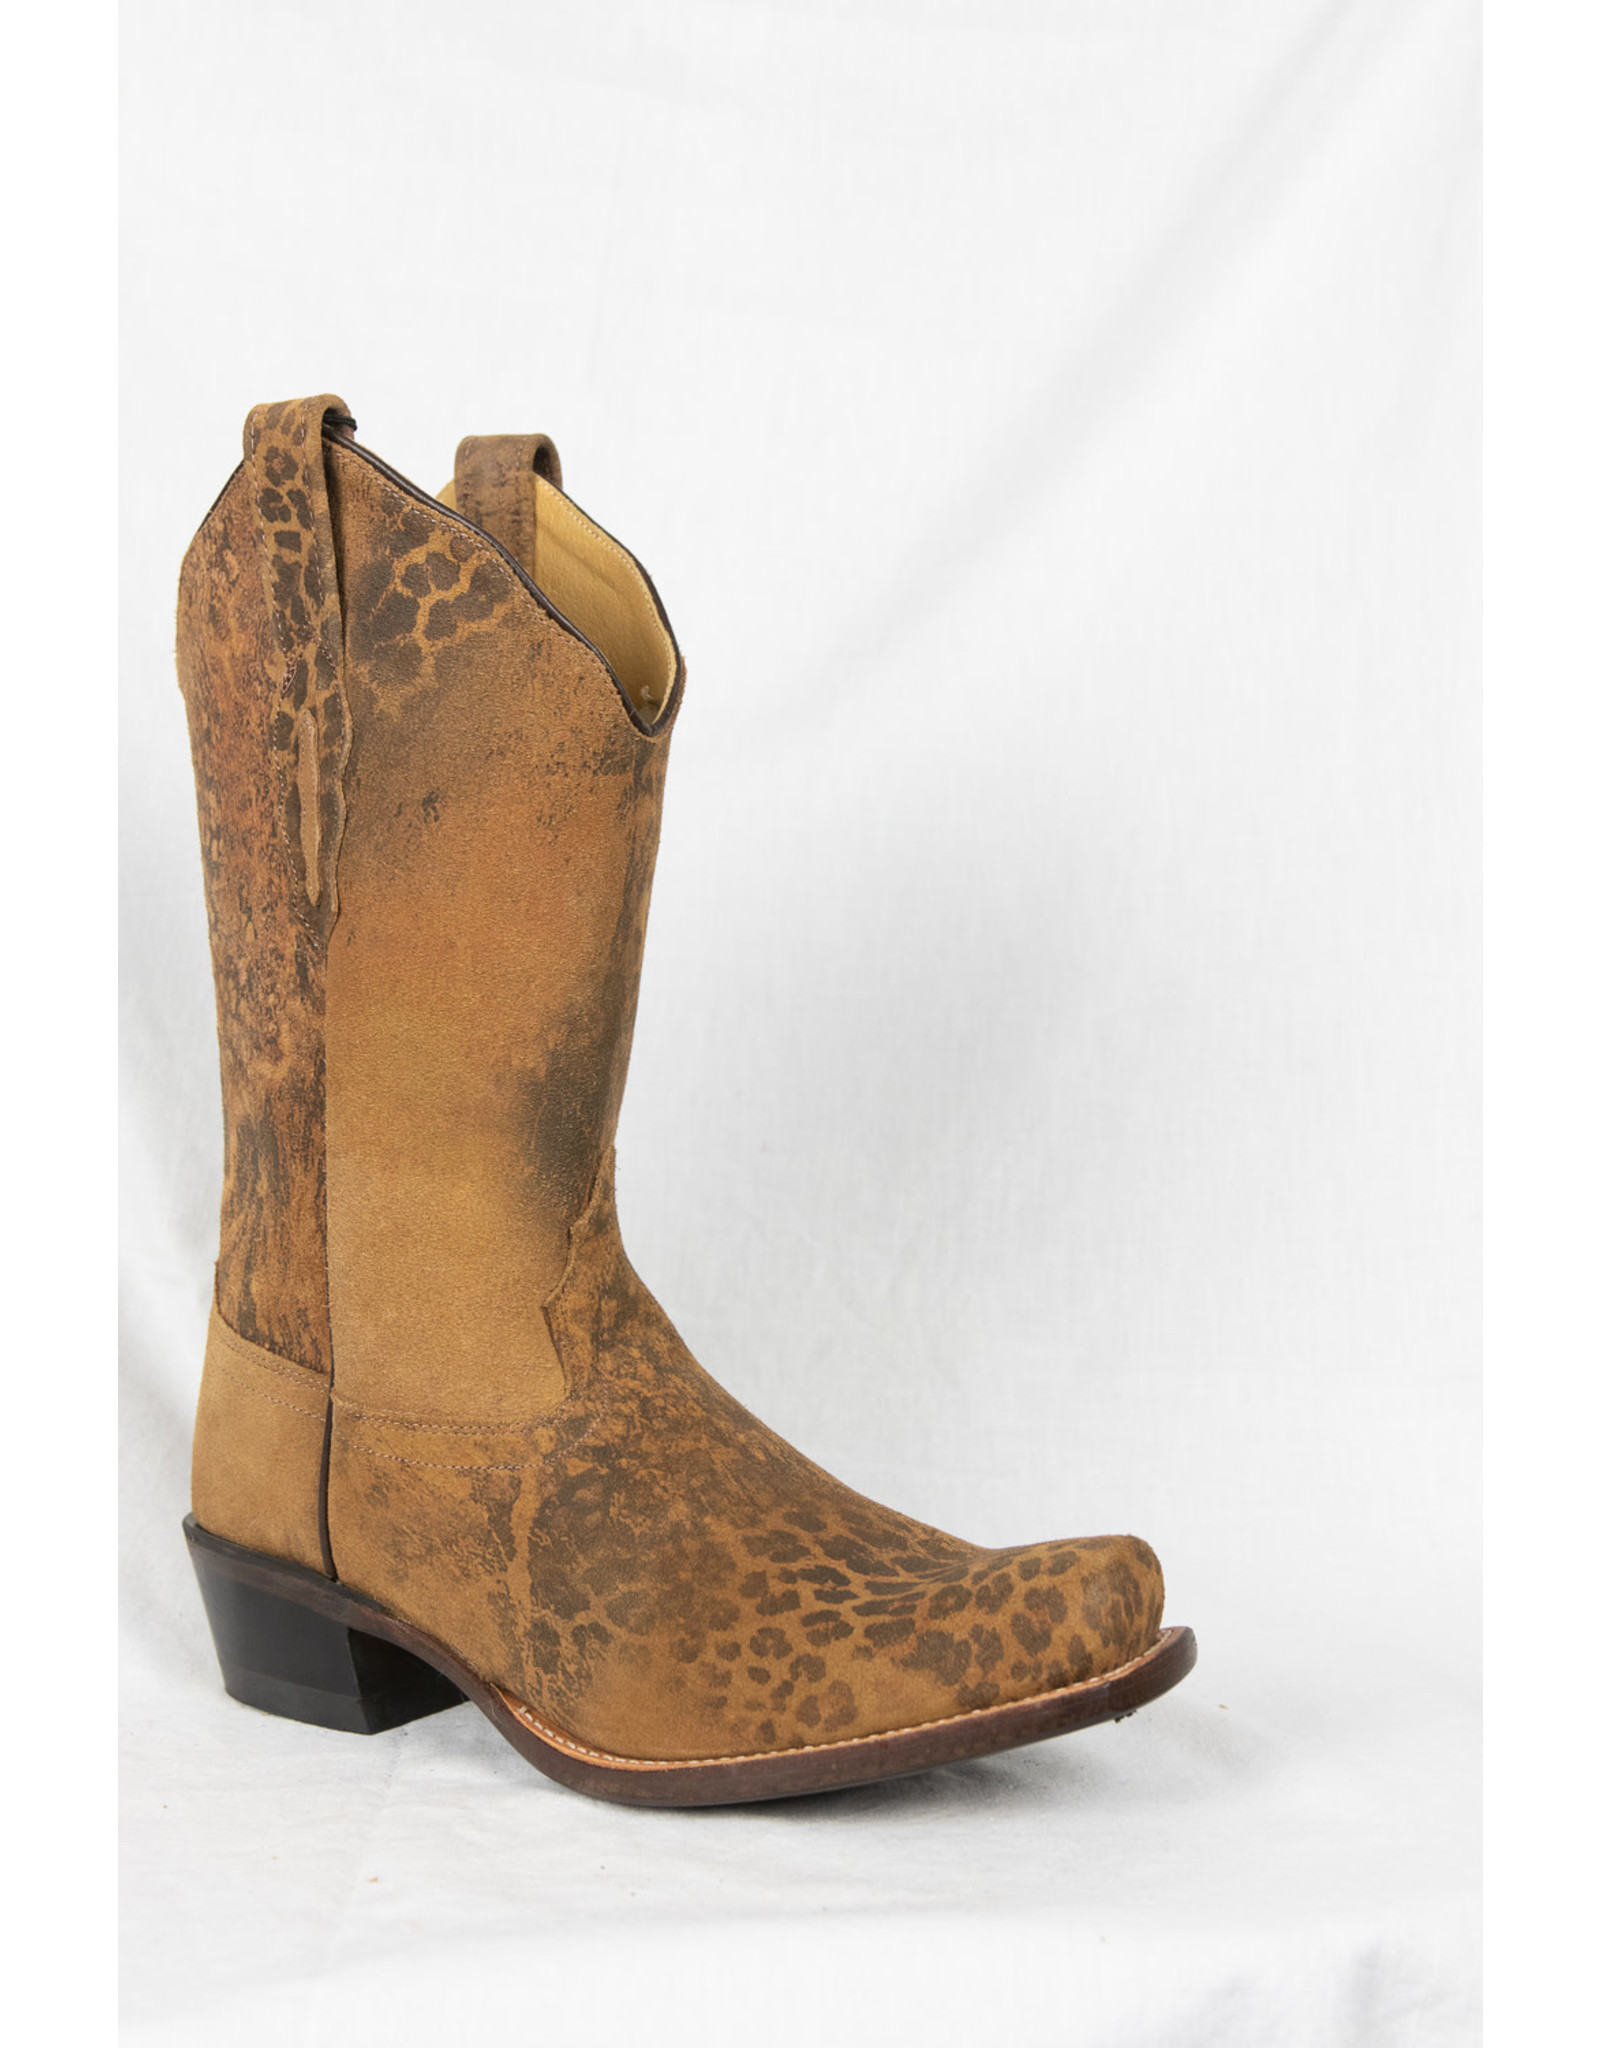 old west women's cowboy boots